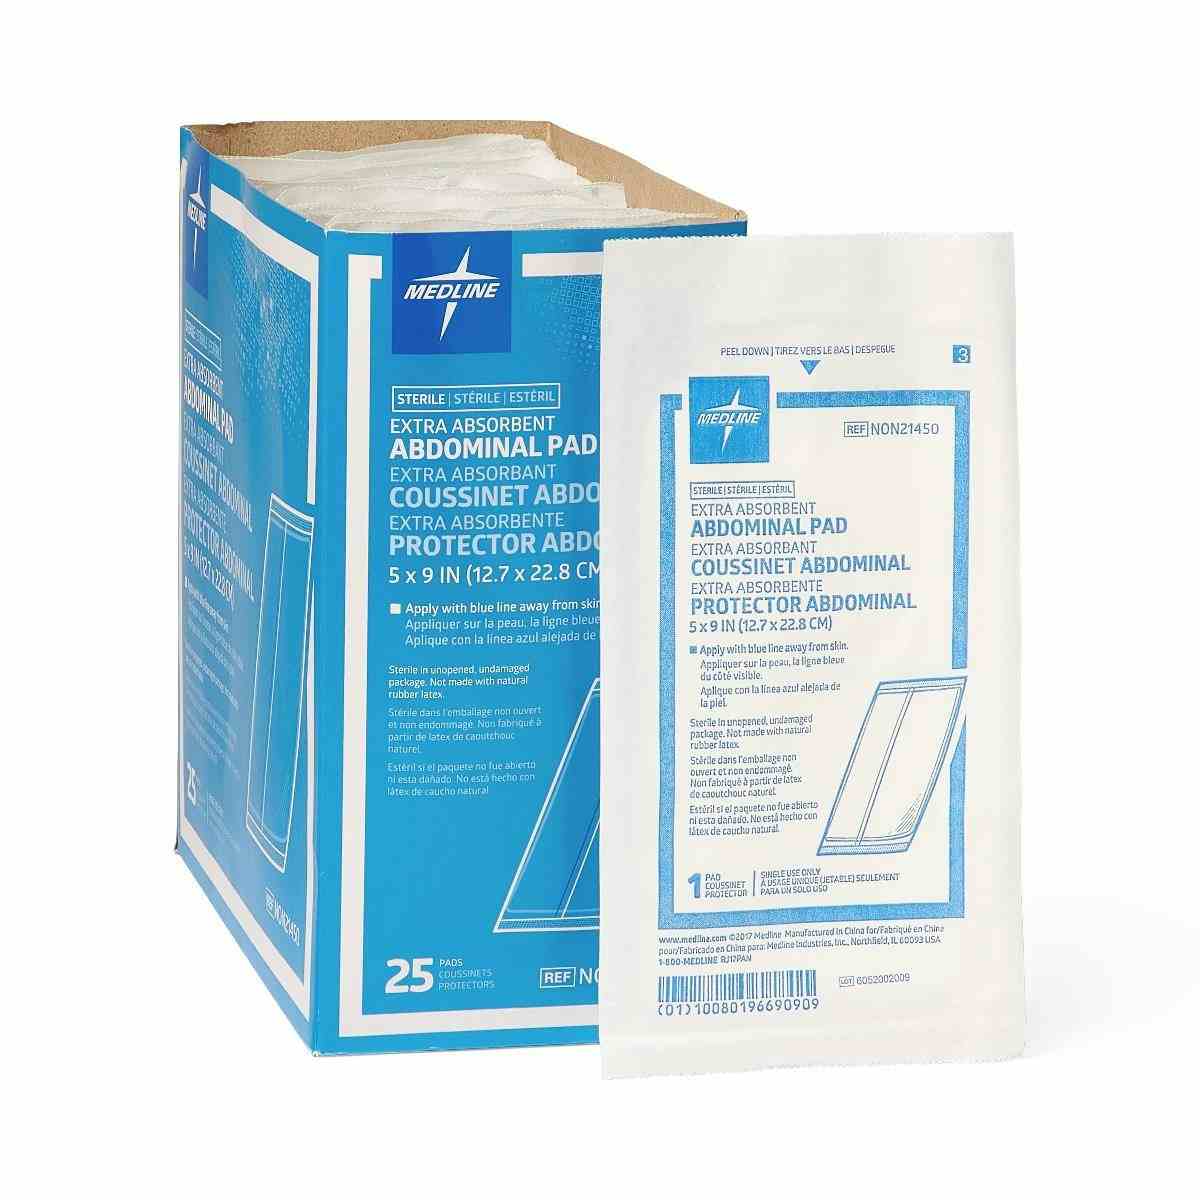 Medline Sterile Abdominal Pads, NON21450H, 5" X 9" - Box of 25